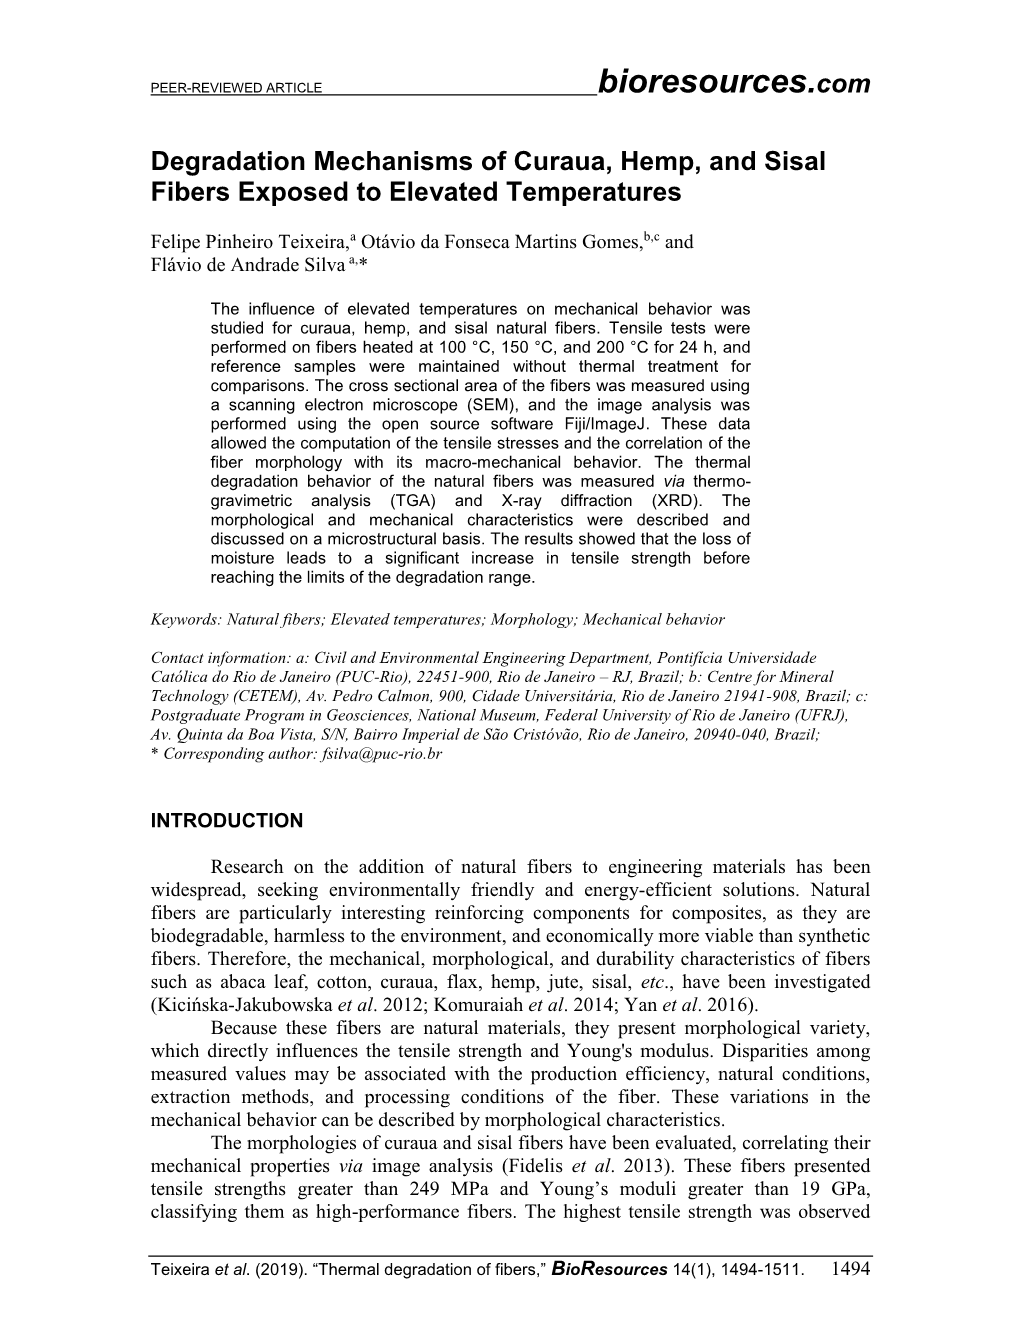 Degradation Mechanisms of Curaua, Hemp, and Sisal Fibers Exposed to Elevated Temperatures